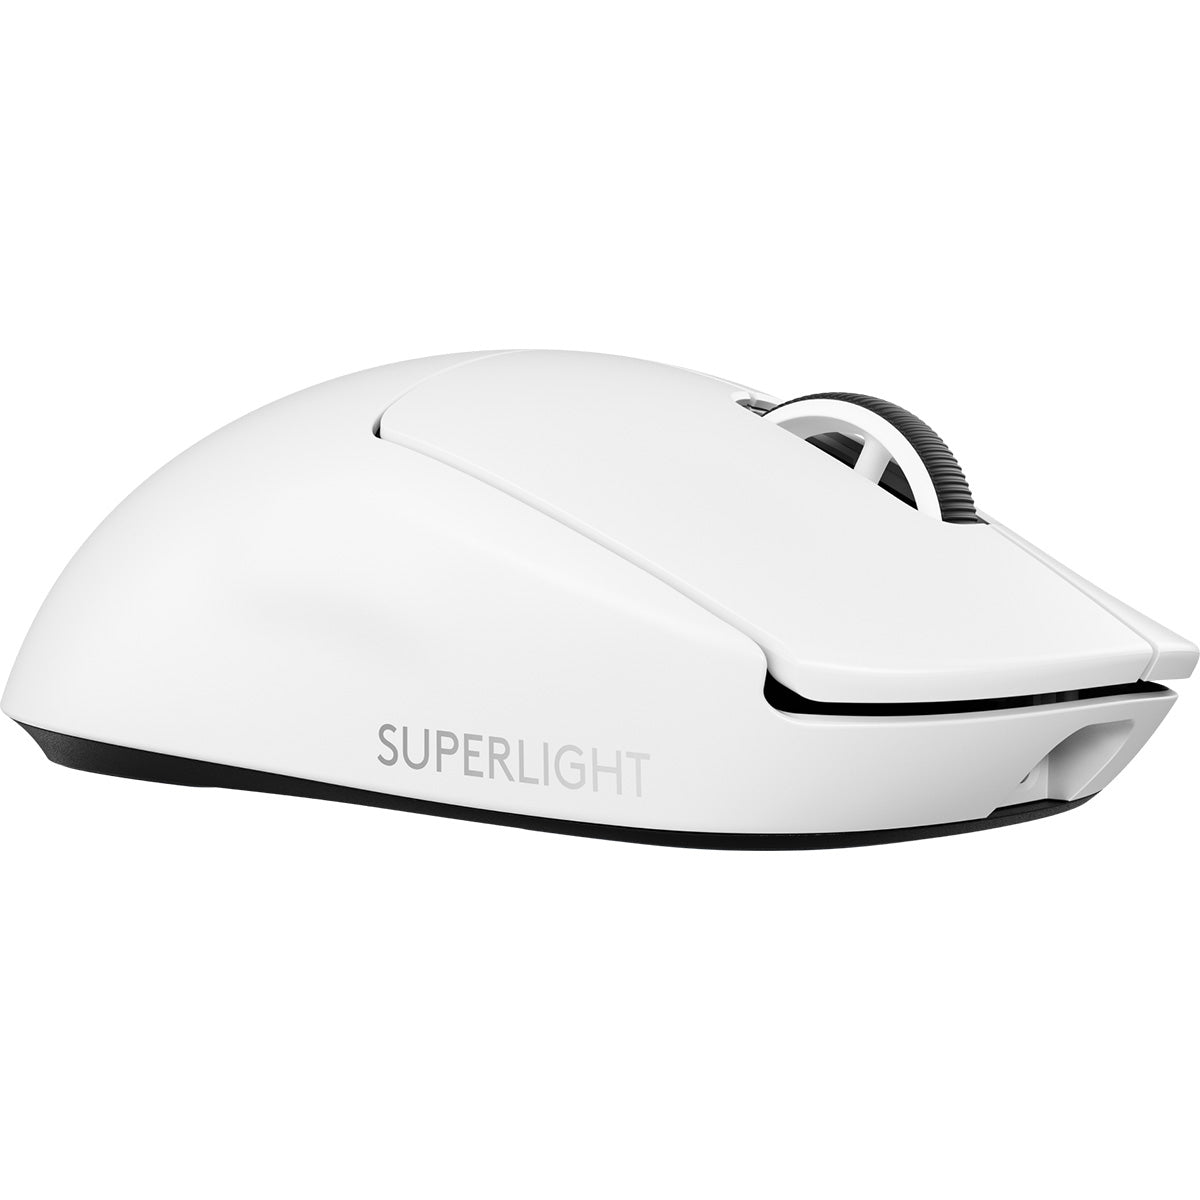 PRO X SUPERLIGHT 2 Wireless Gaming Mice